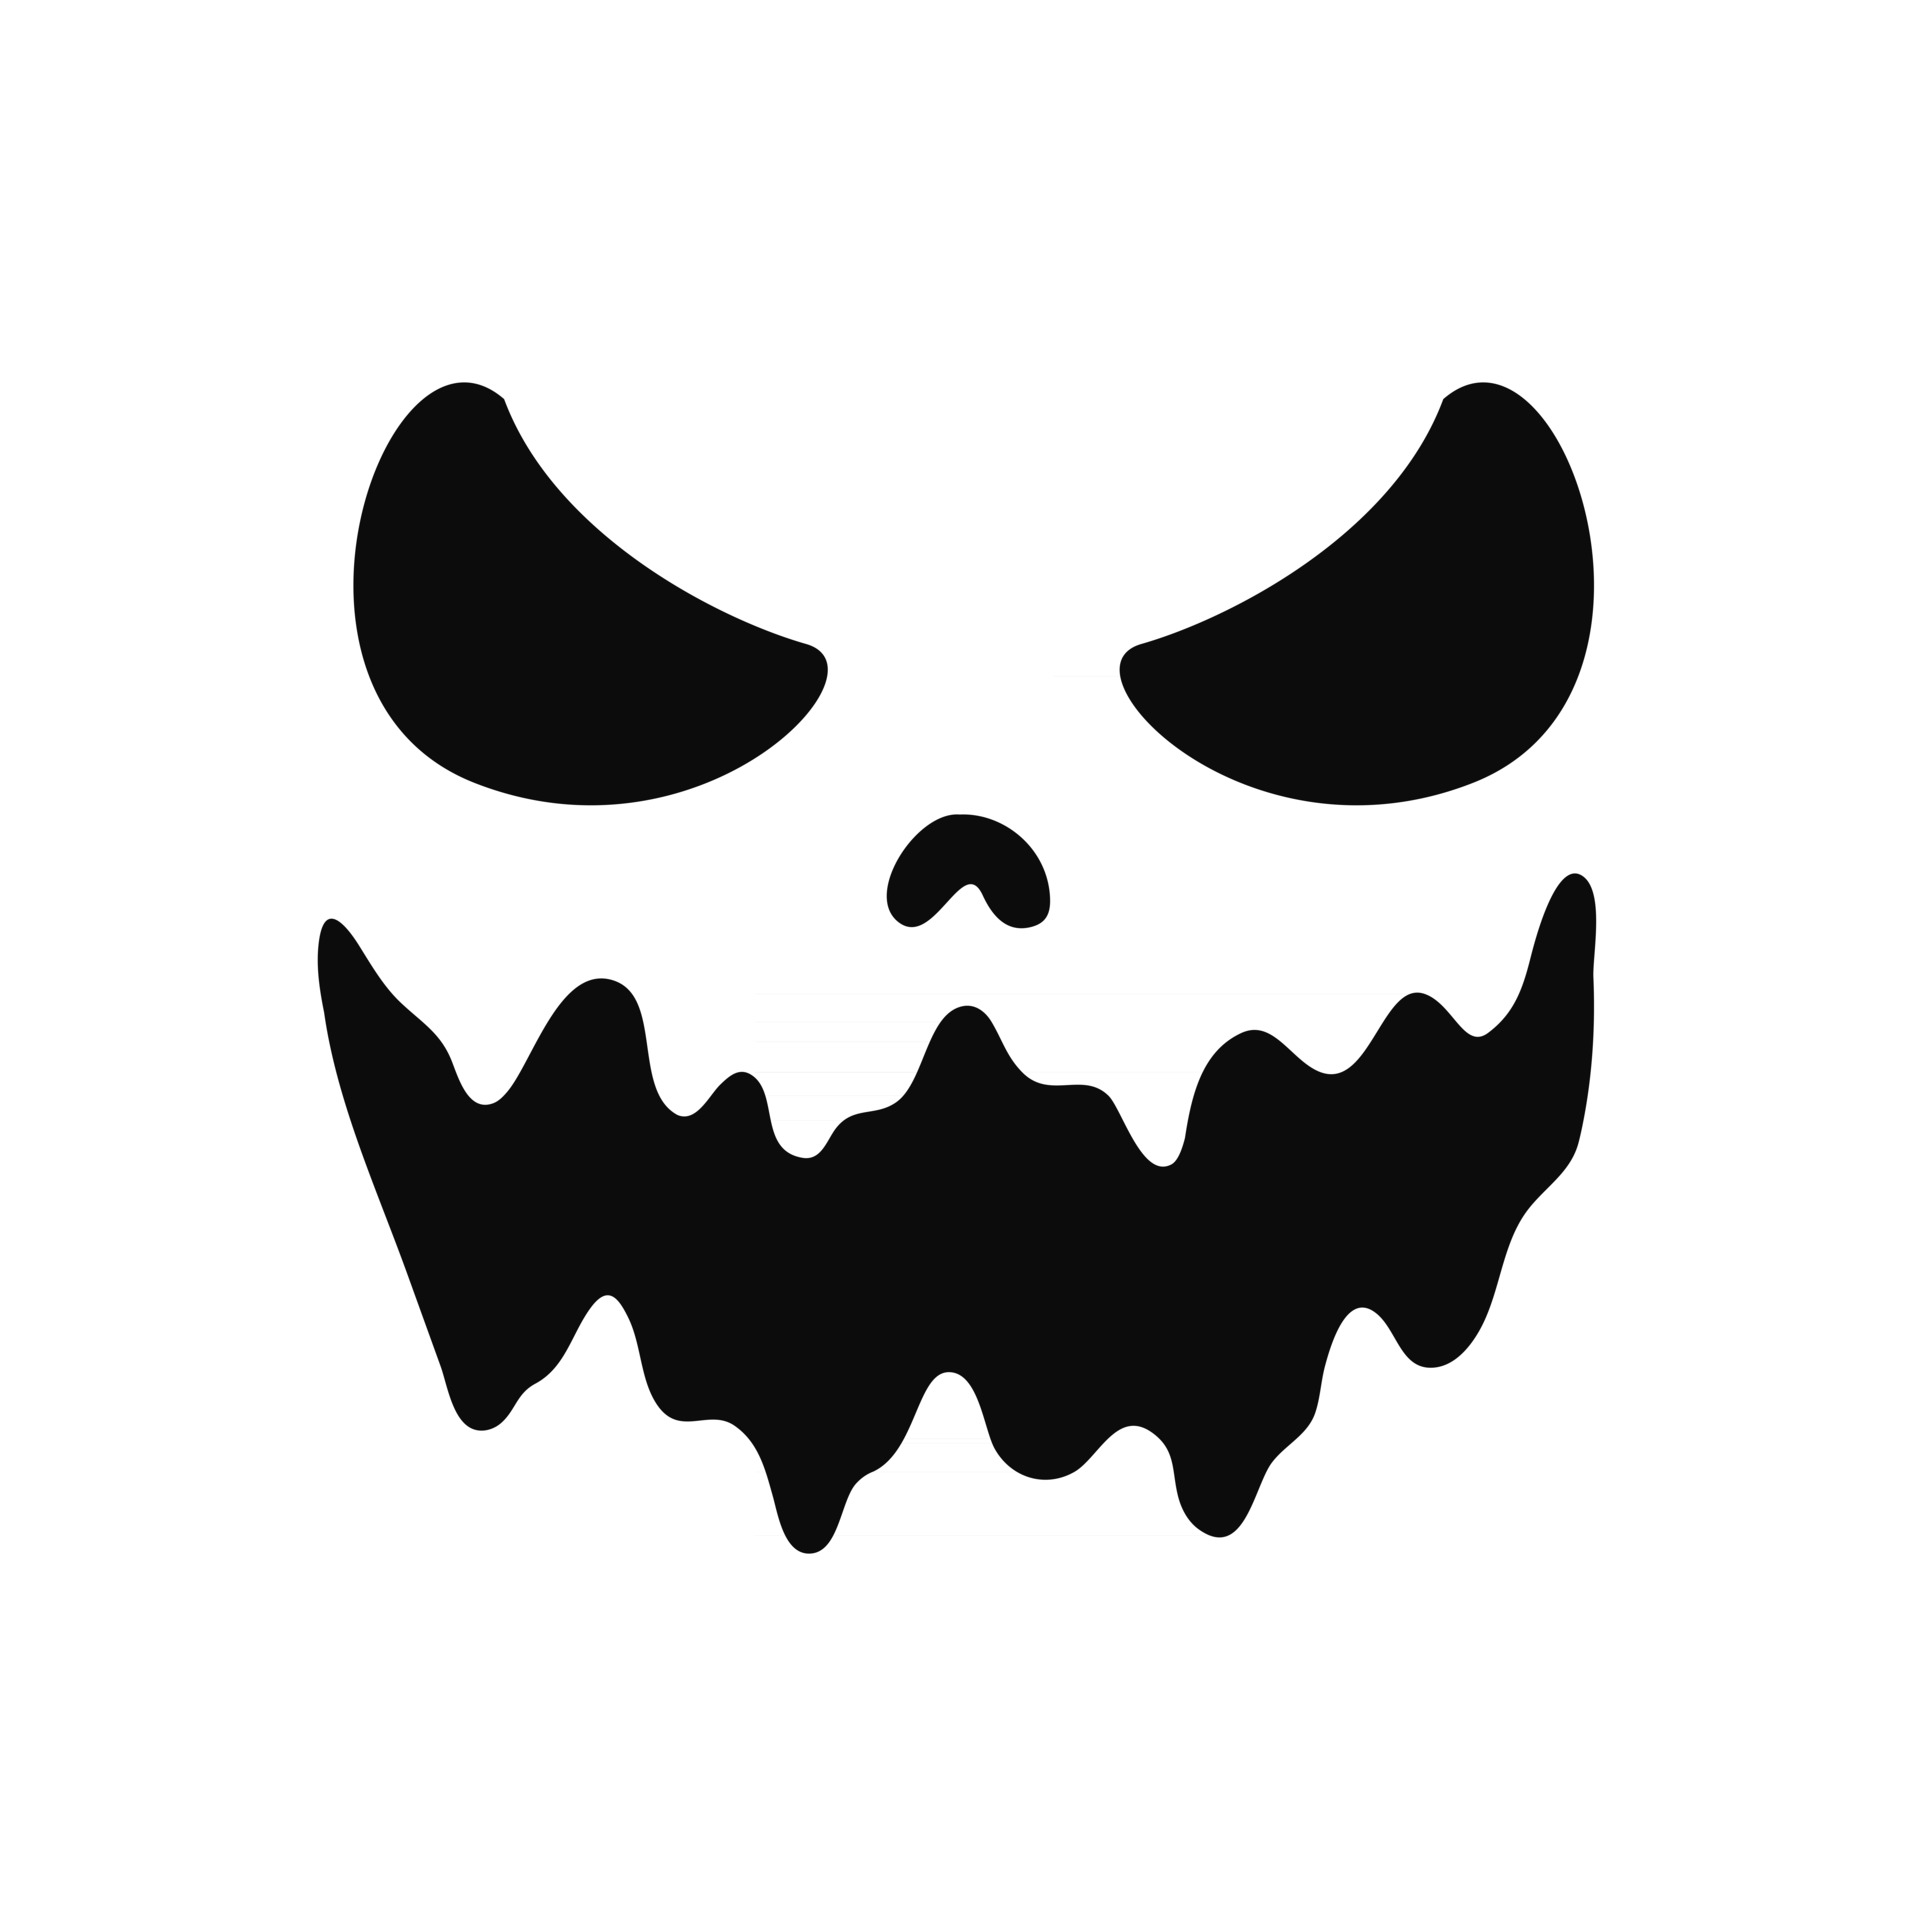 rostos assustadores de abóbora de halloween ou logotipo fantasma premium  modelo elegante vetor eps 10 11593307 Vetor no Vecteezy